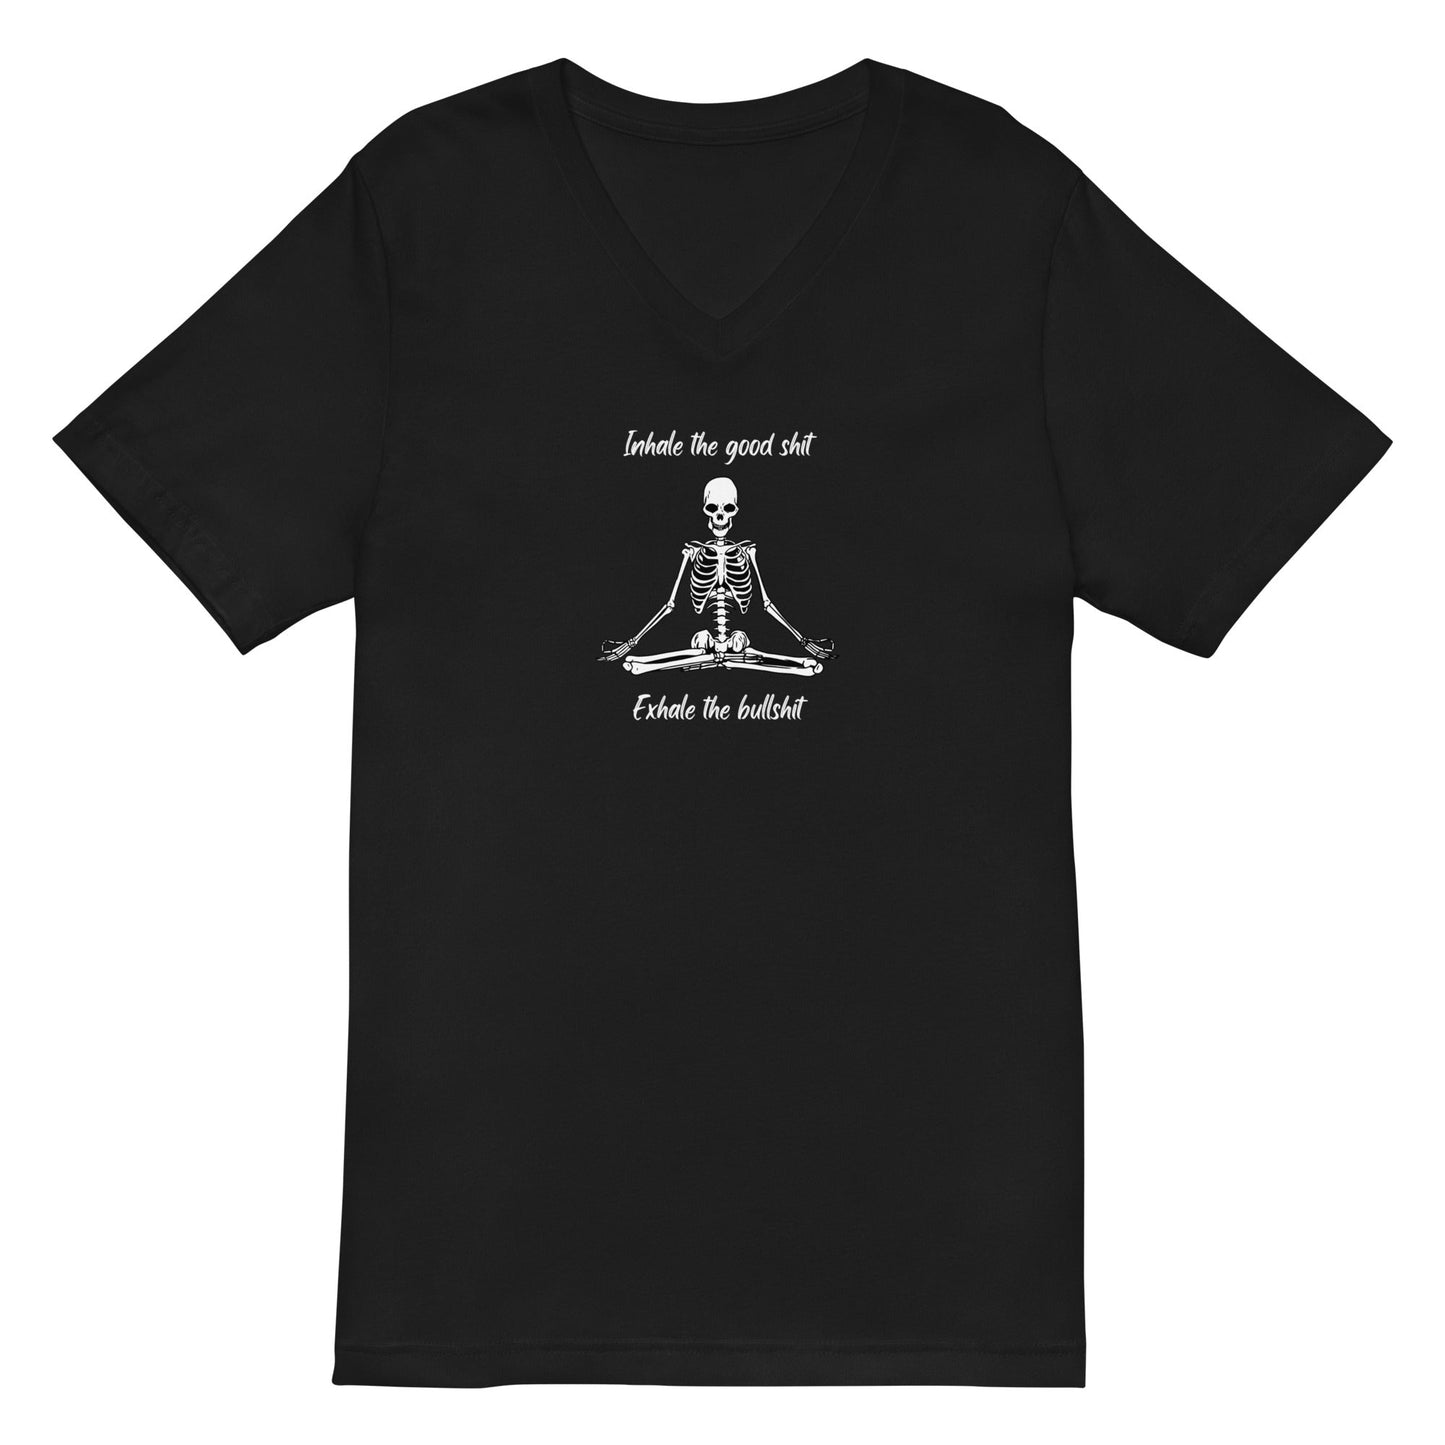 Inhale-Exhale - V-neck T-shirt